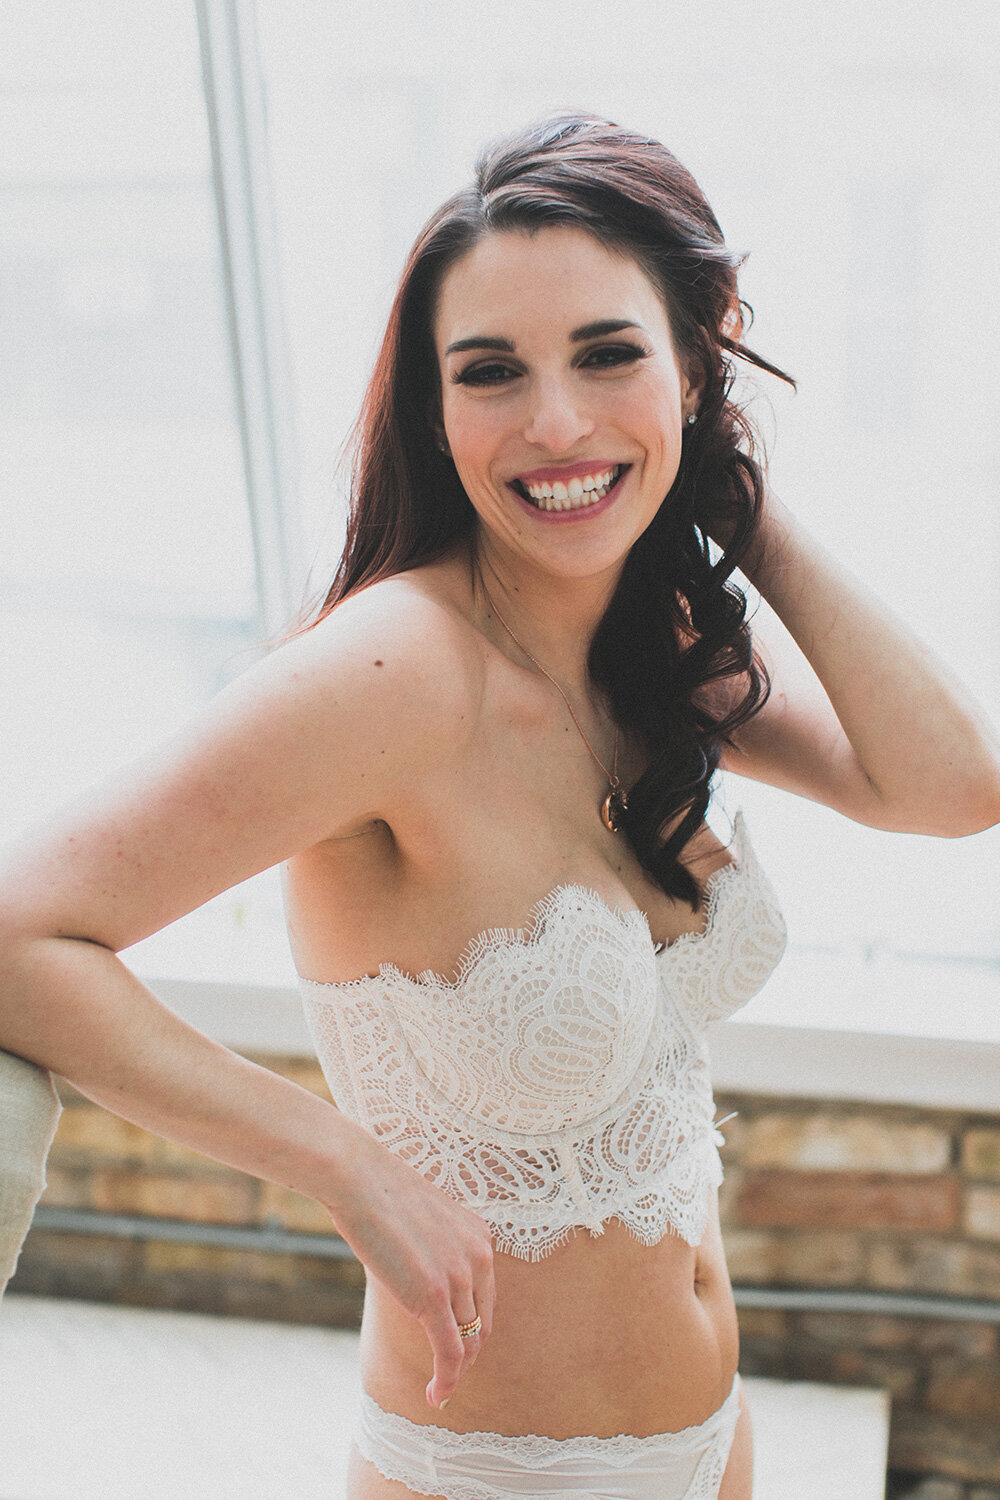 A woman smiles as she poses for a boudoir photo